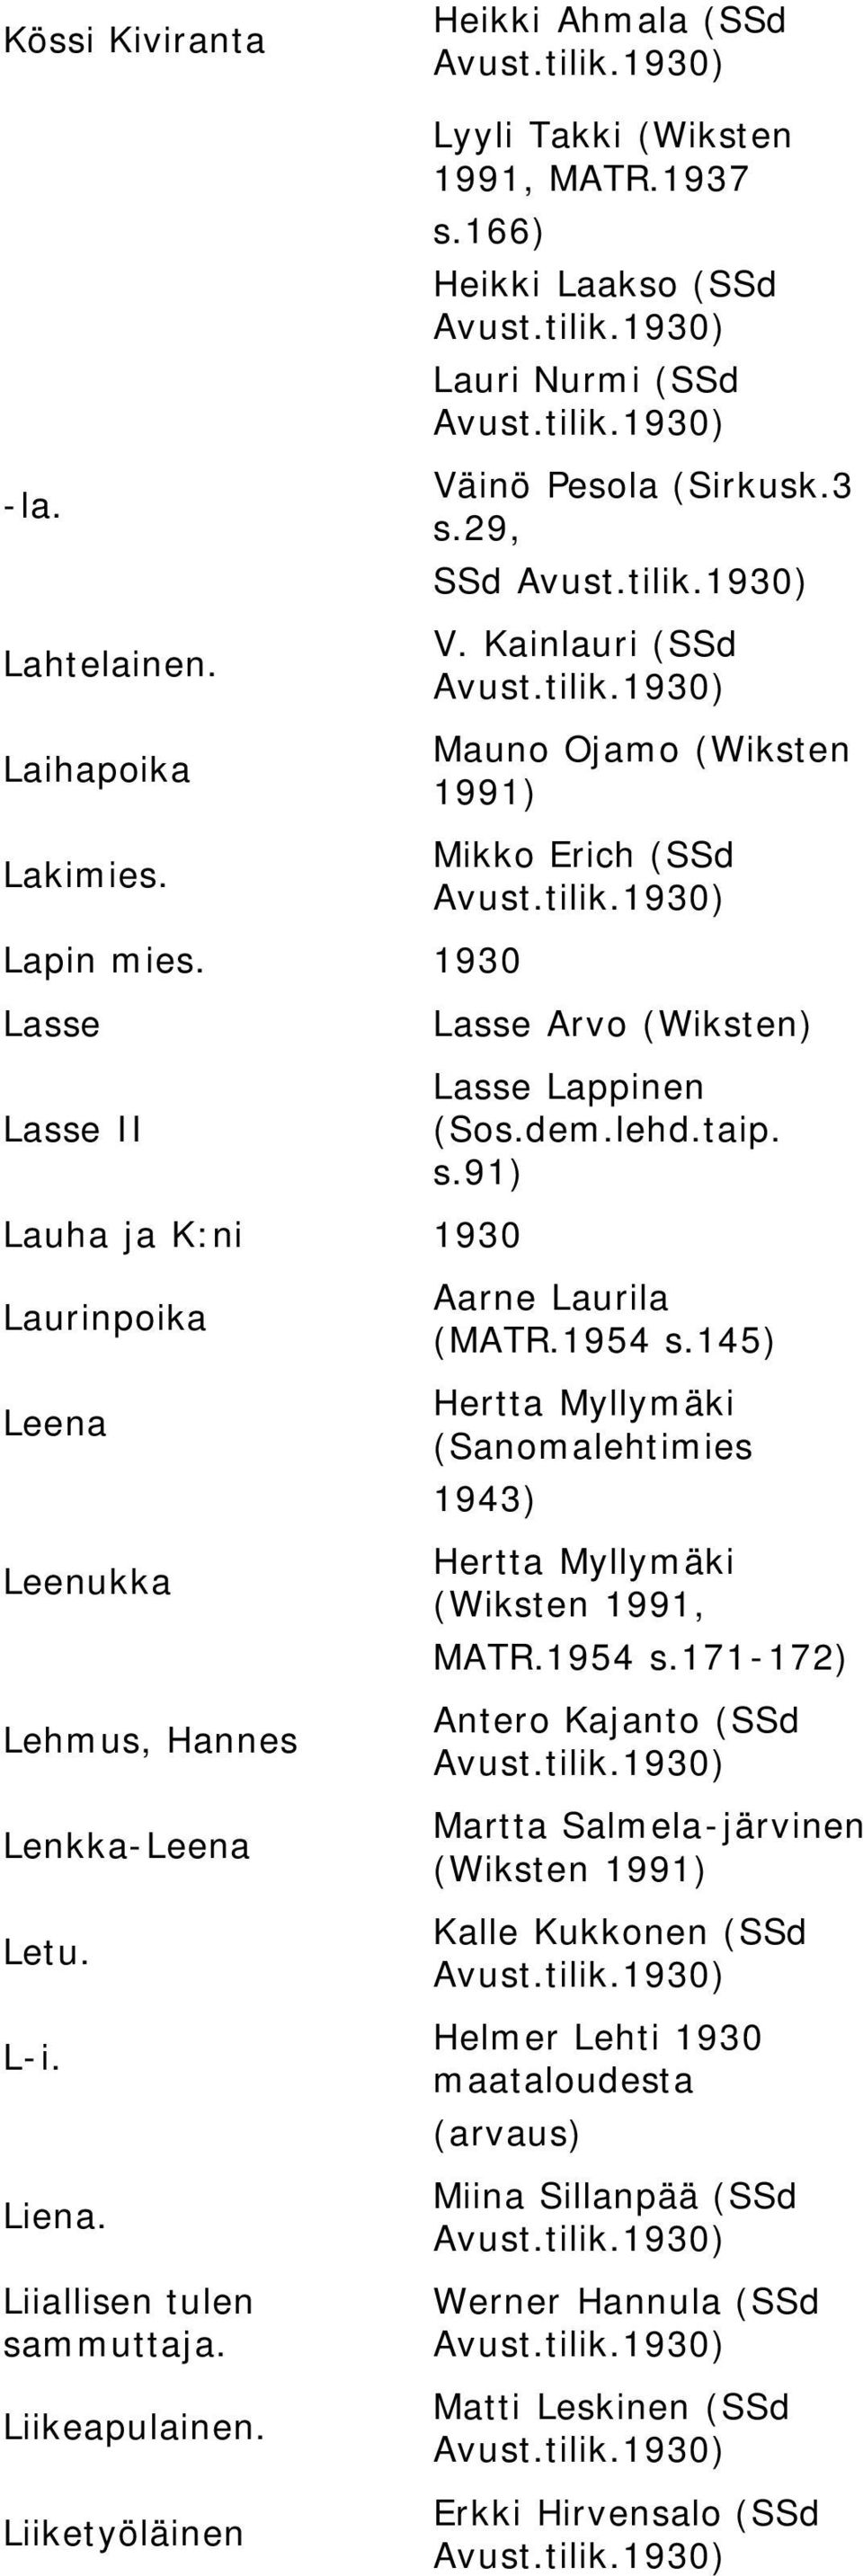 Kainlauri (SSd Mauno Ojamo (Wiksten Mikko Erich (SSd Lasse Arvo (Wiksten) Lasse Lappinen (Sos.dem.lehd.taip. s.91) Aarne Laurila (MATR.1954 s.